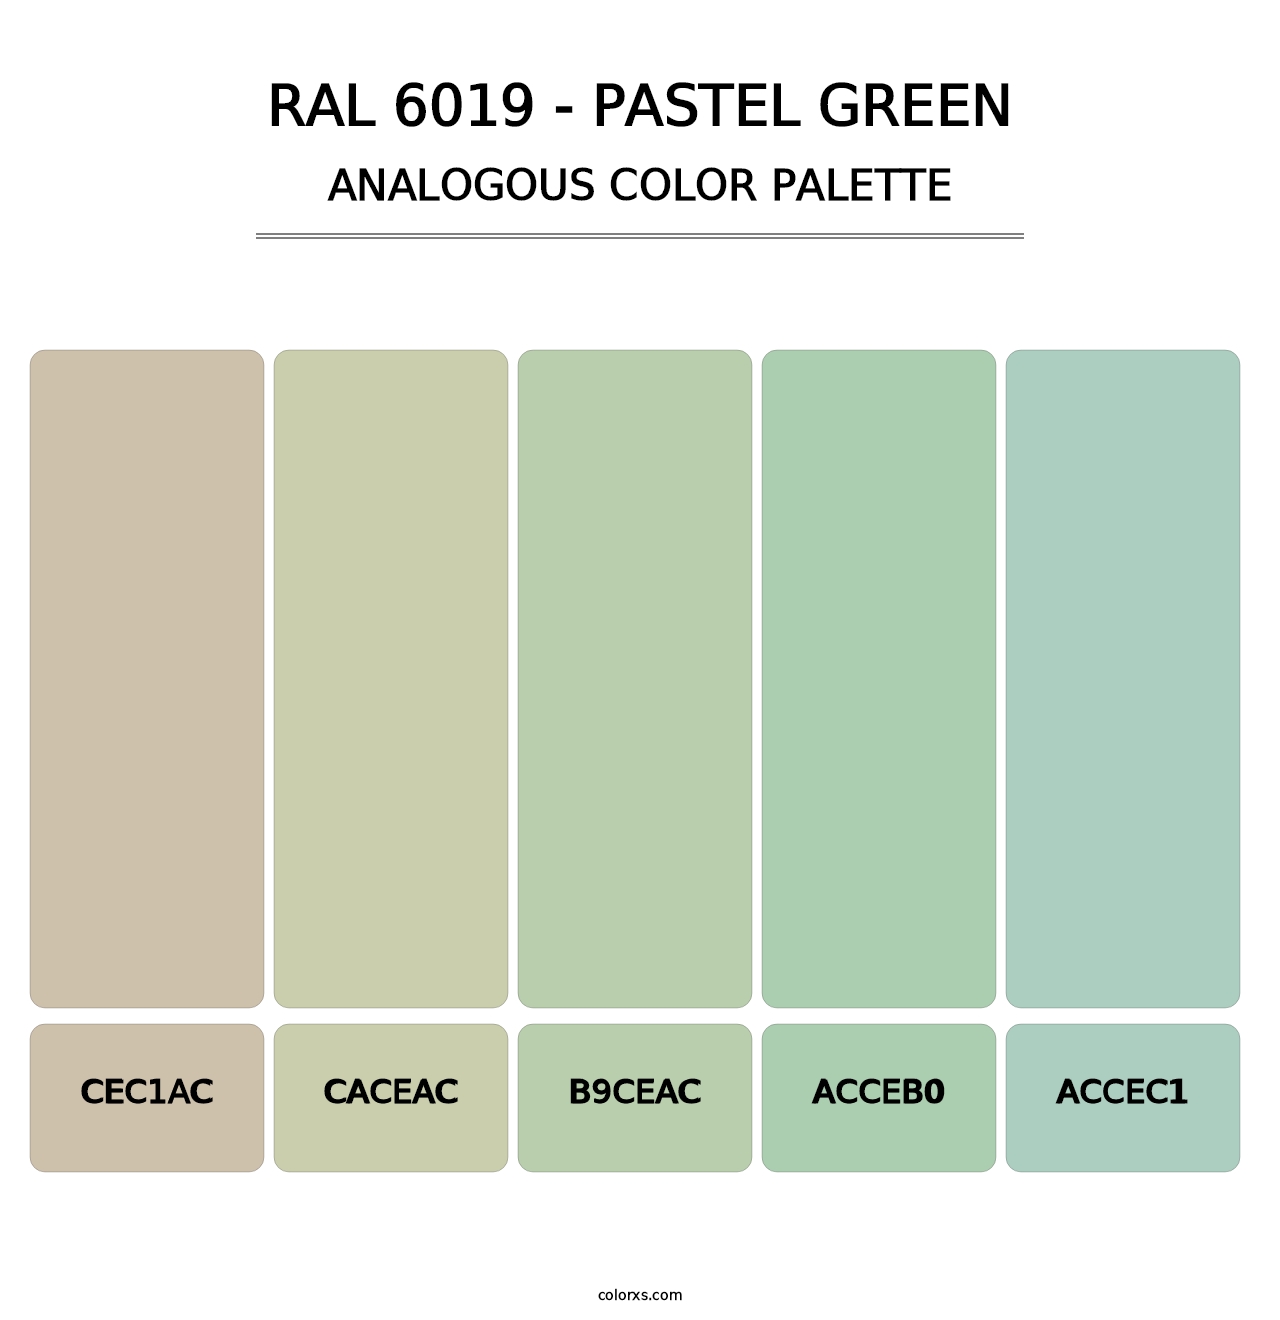 RAL 6019 - Pastel Green - Analogous Color Palette